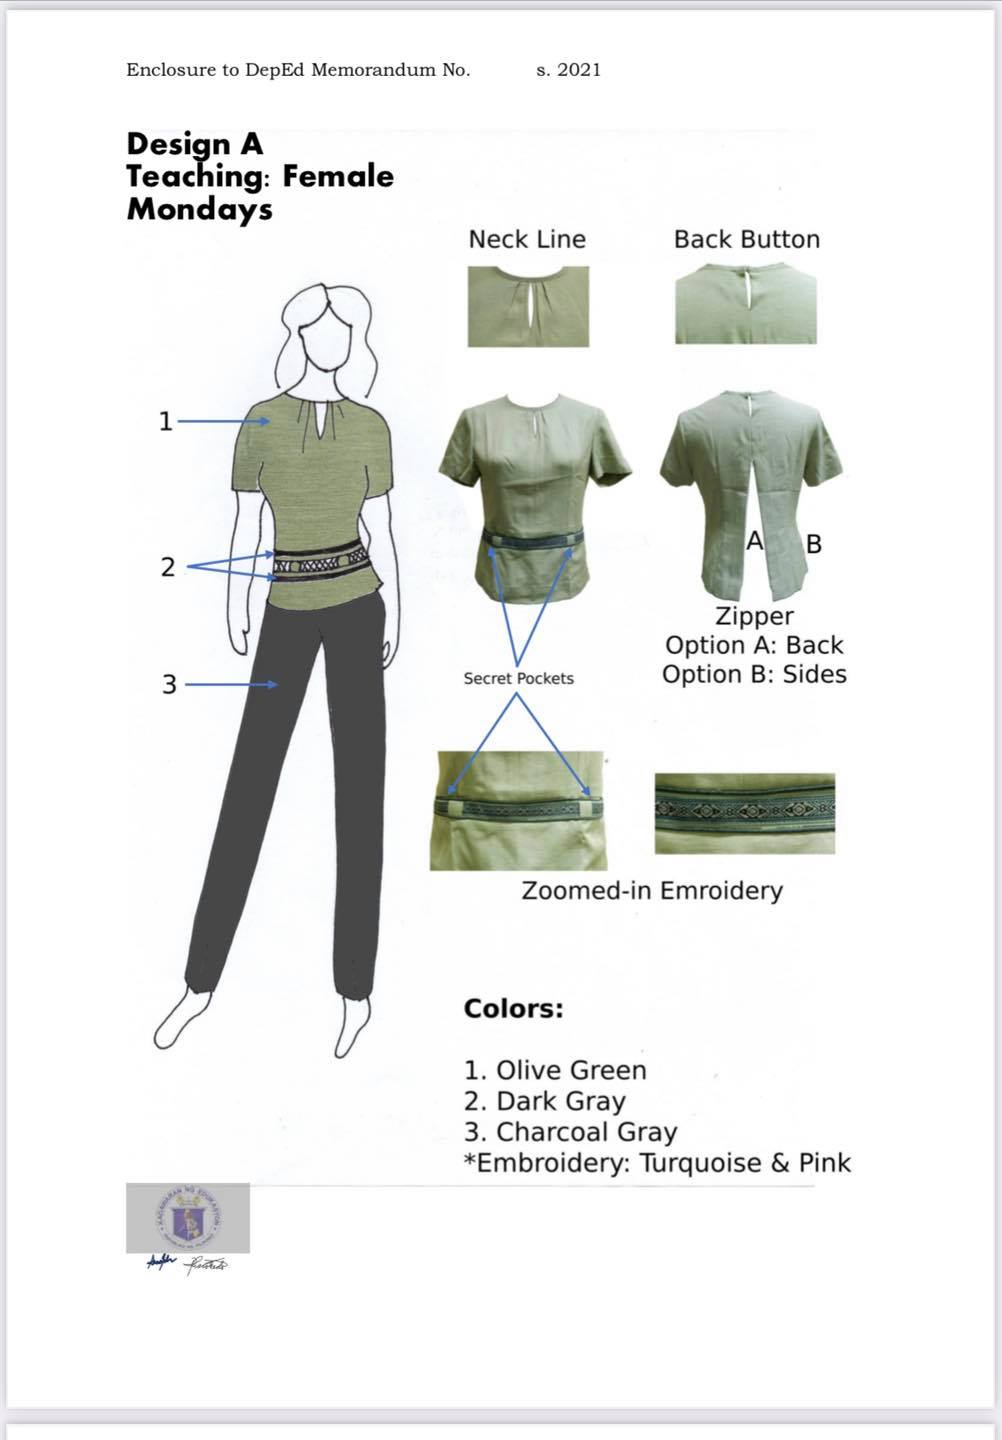 DepEd National Uniform Design A for Teaching Personnel (Mondays)